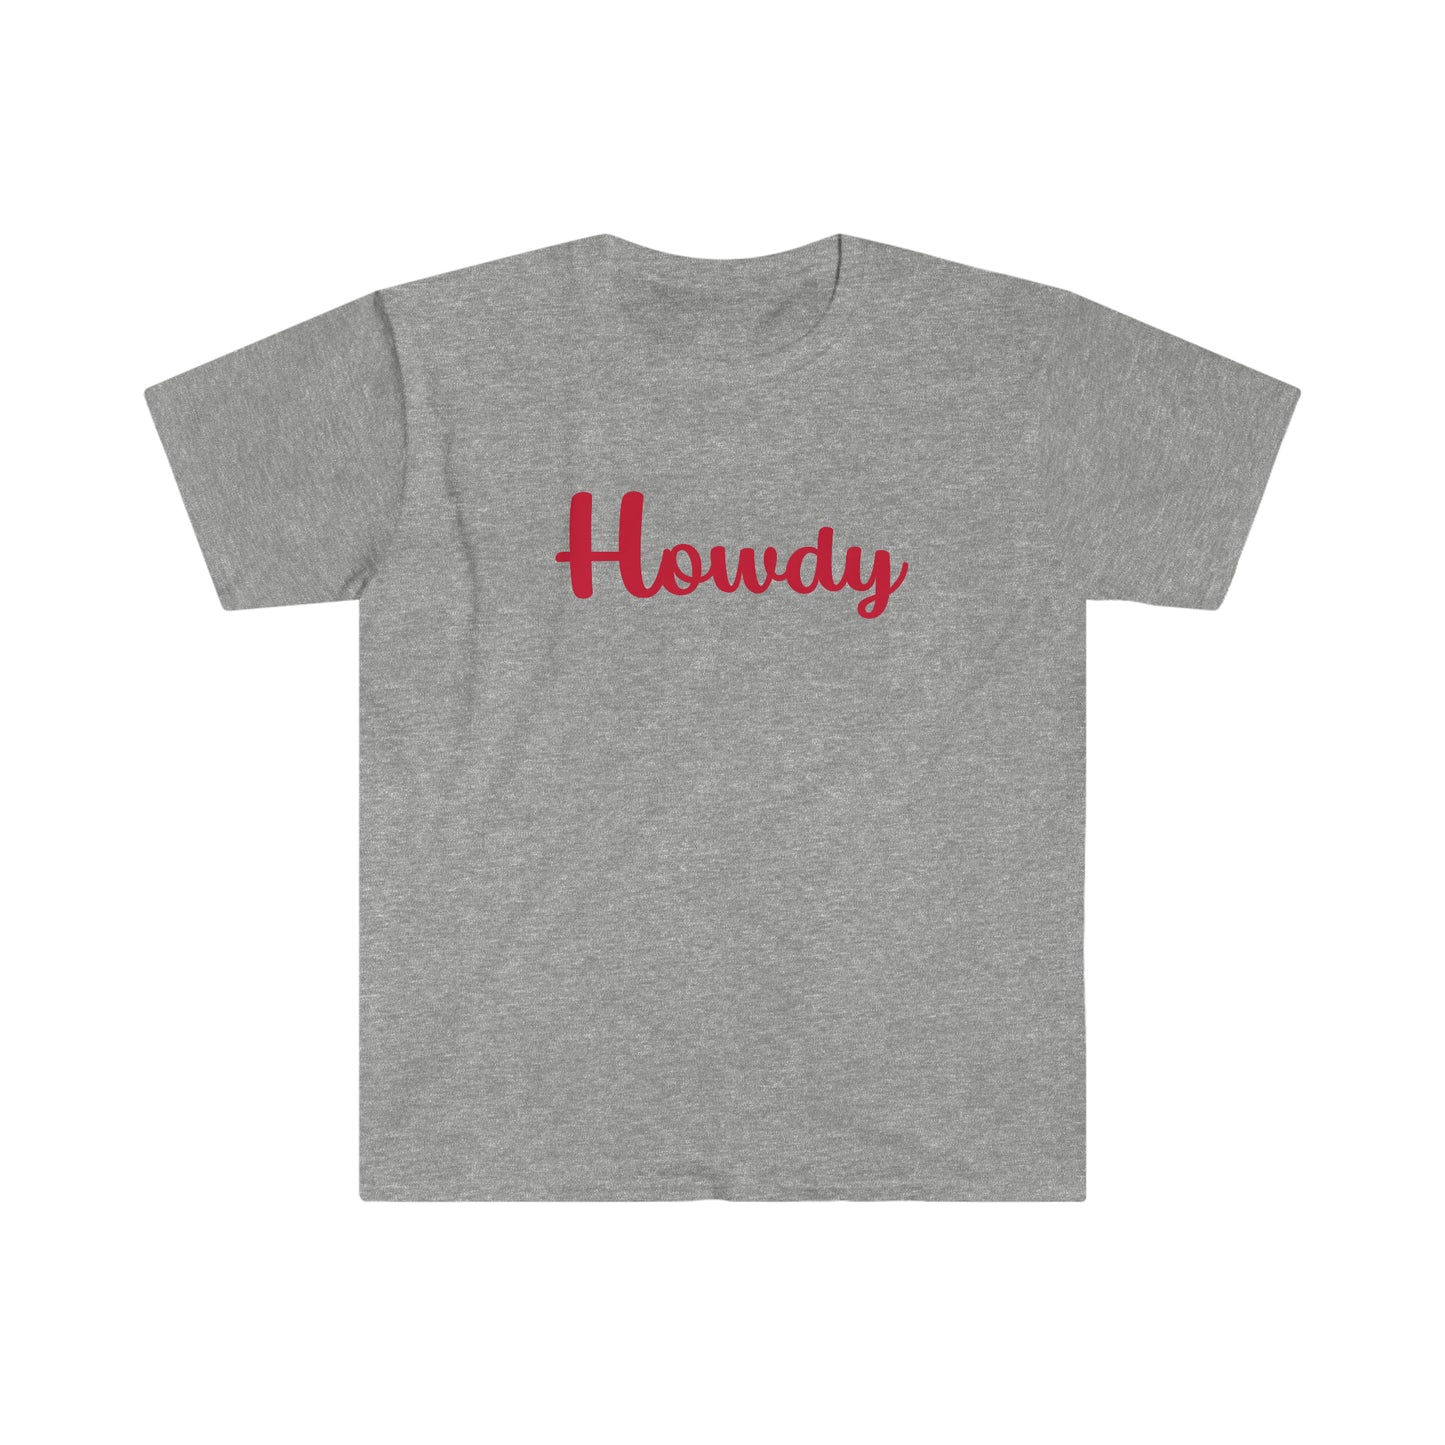 Howdy - Houston T-Shirt